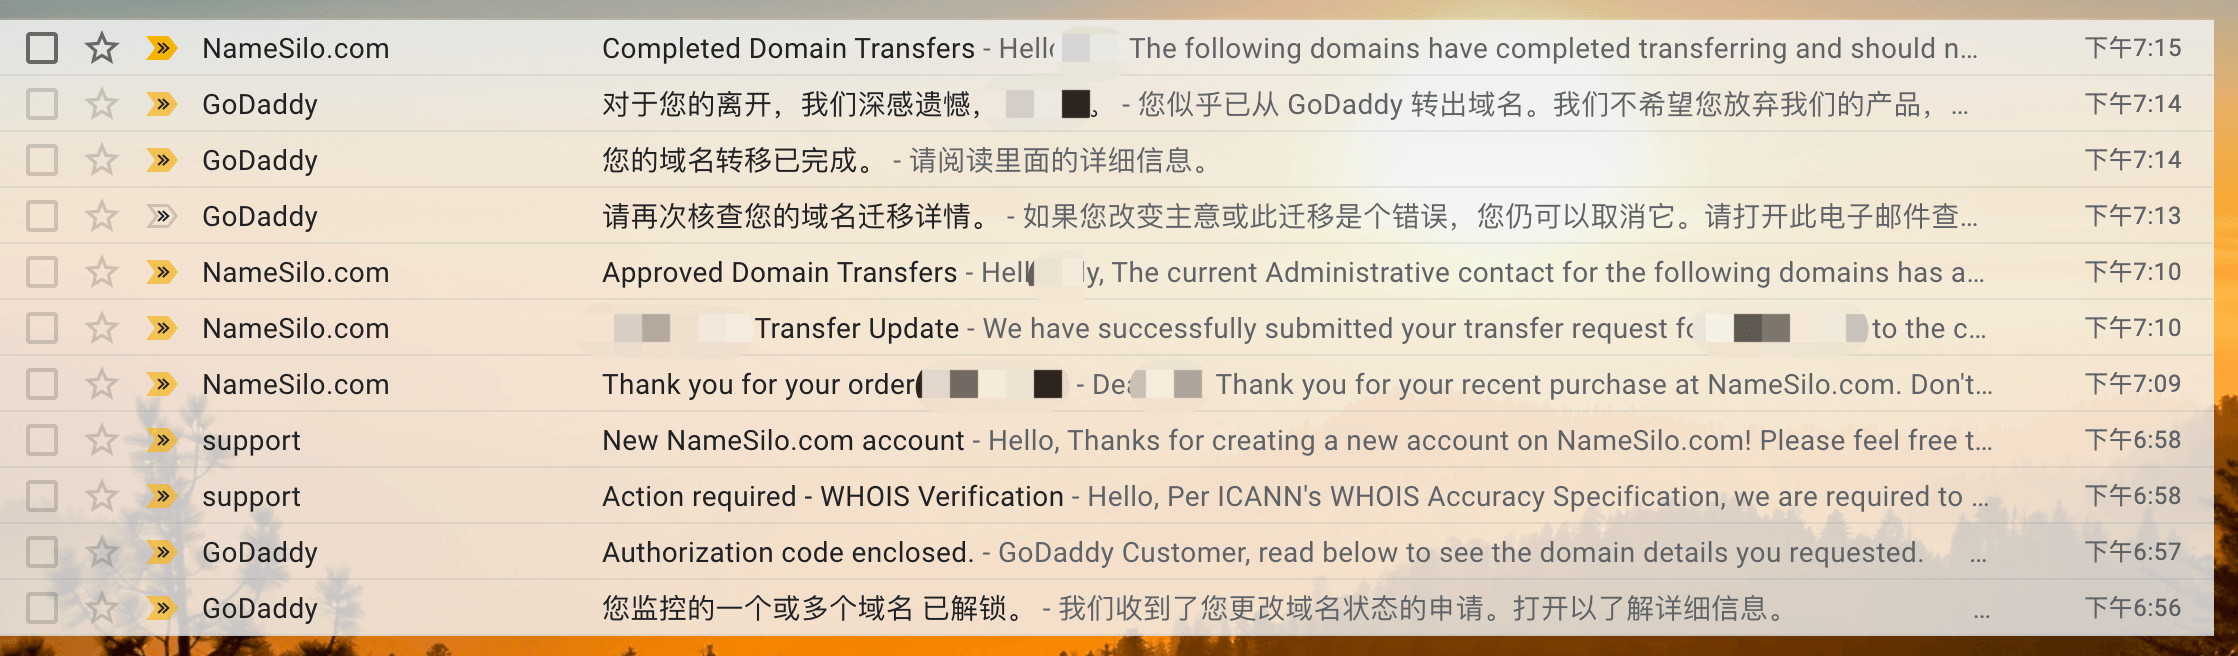 transfer-domain-from-godaddy-to-namesilo